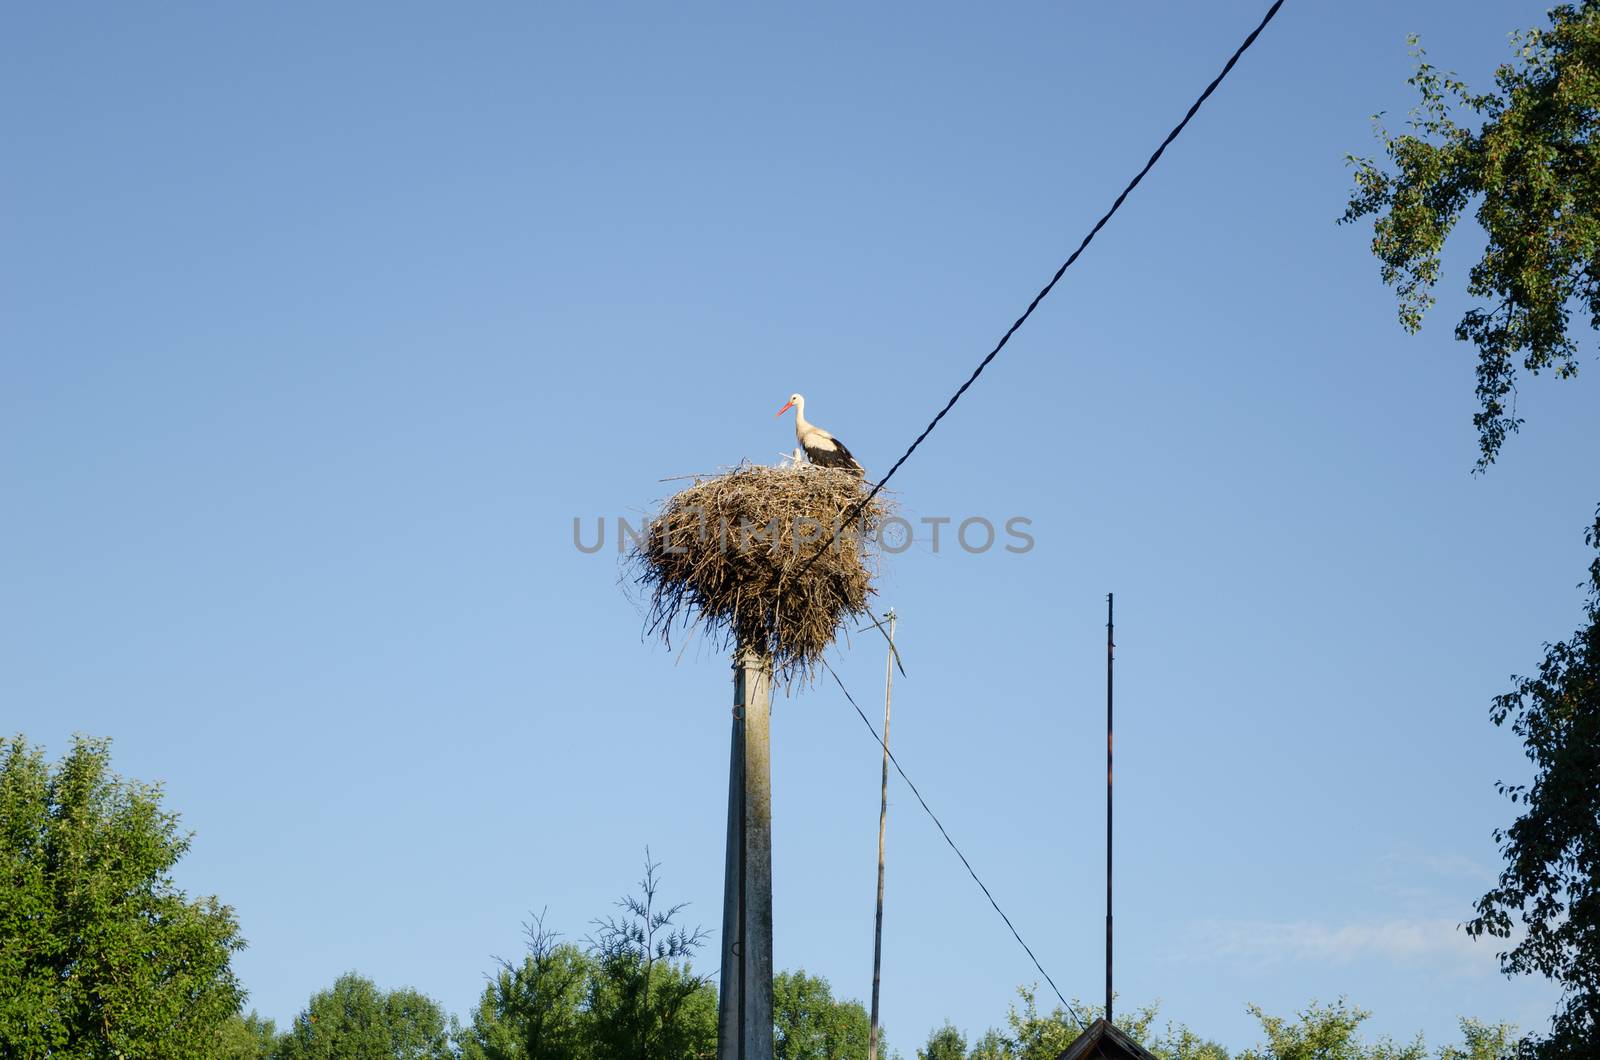 nest with stork on electric pole on blue sky background